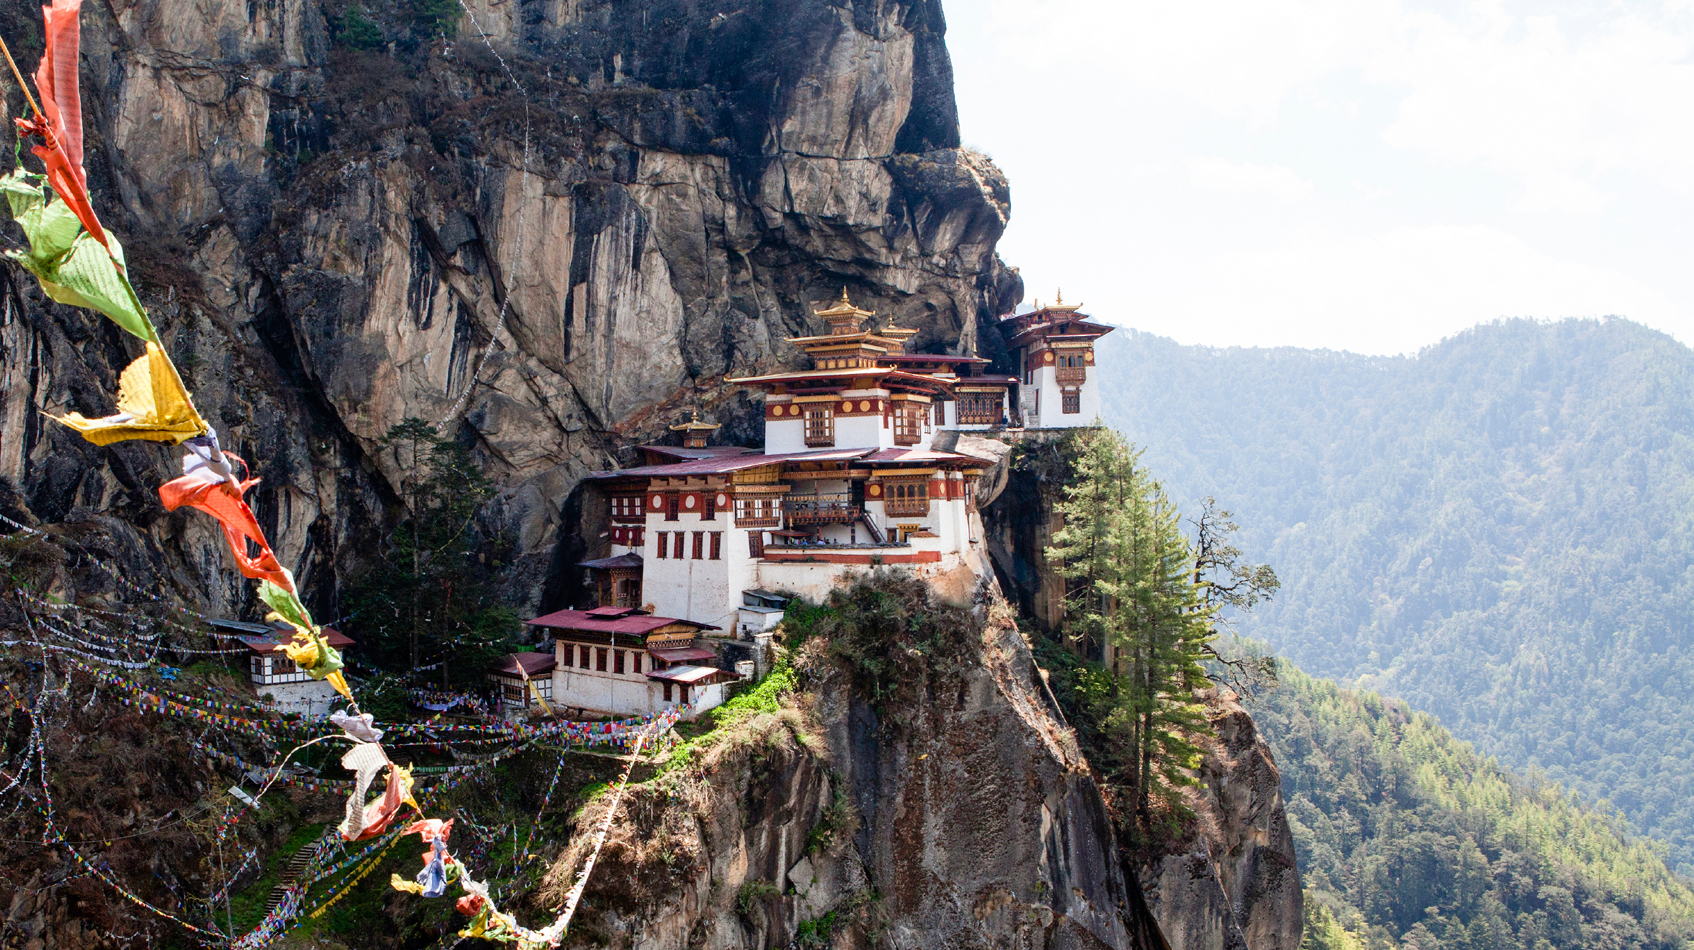 bhutan tourism gold scheme